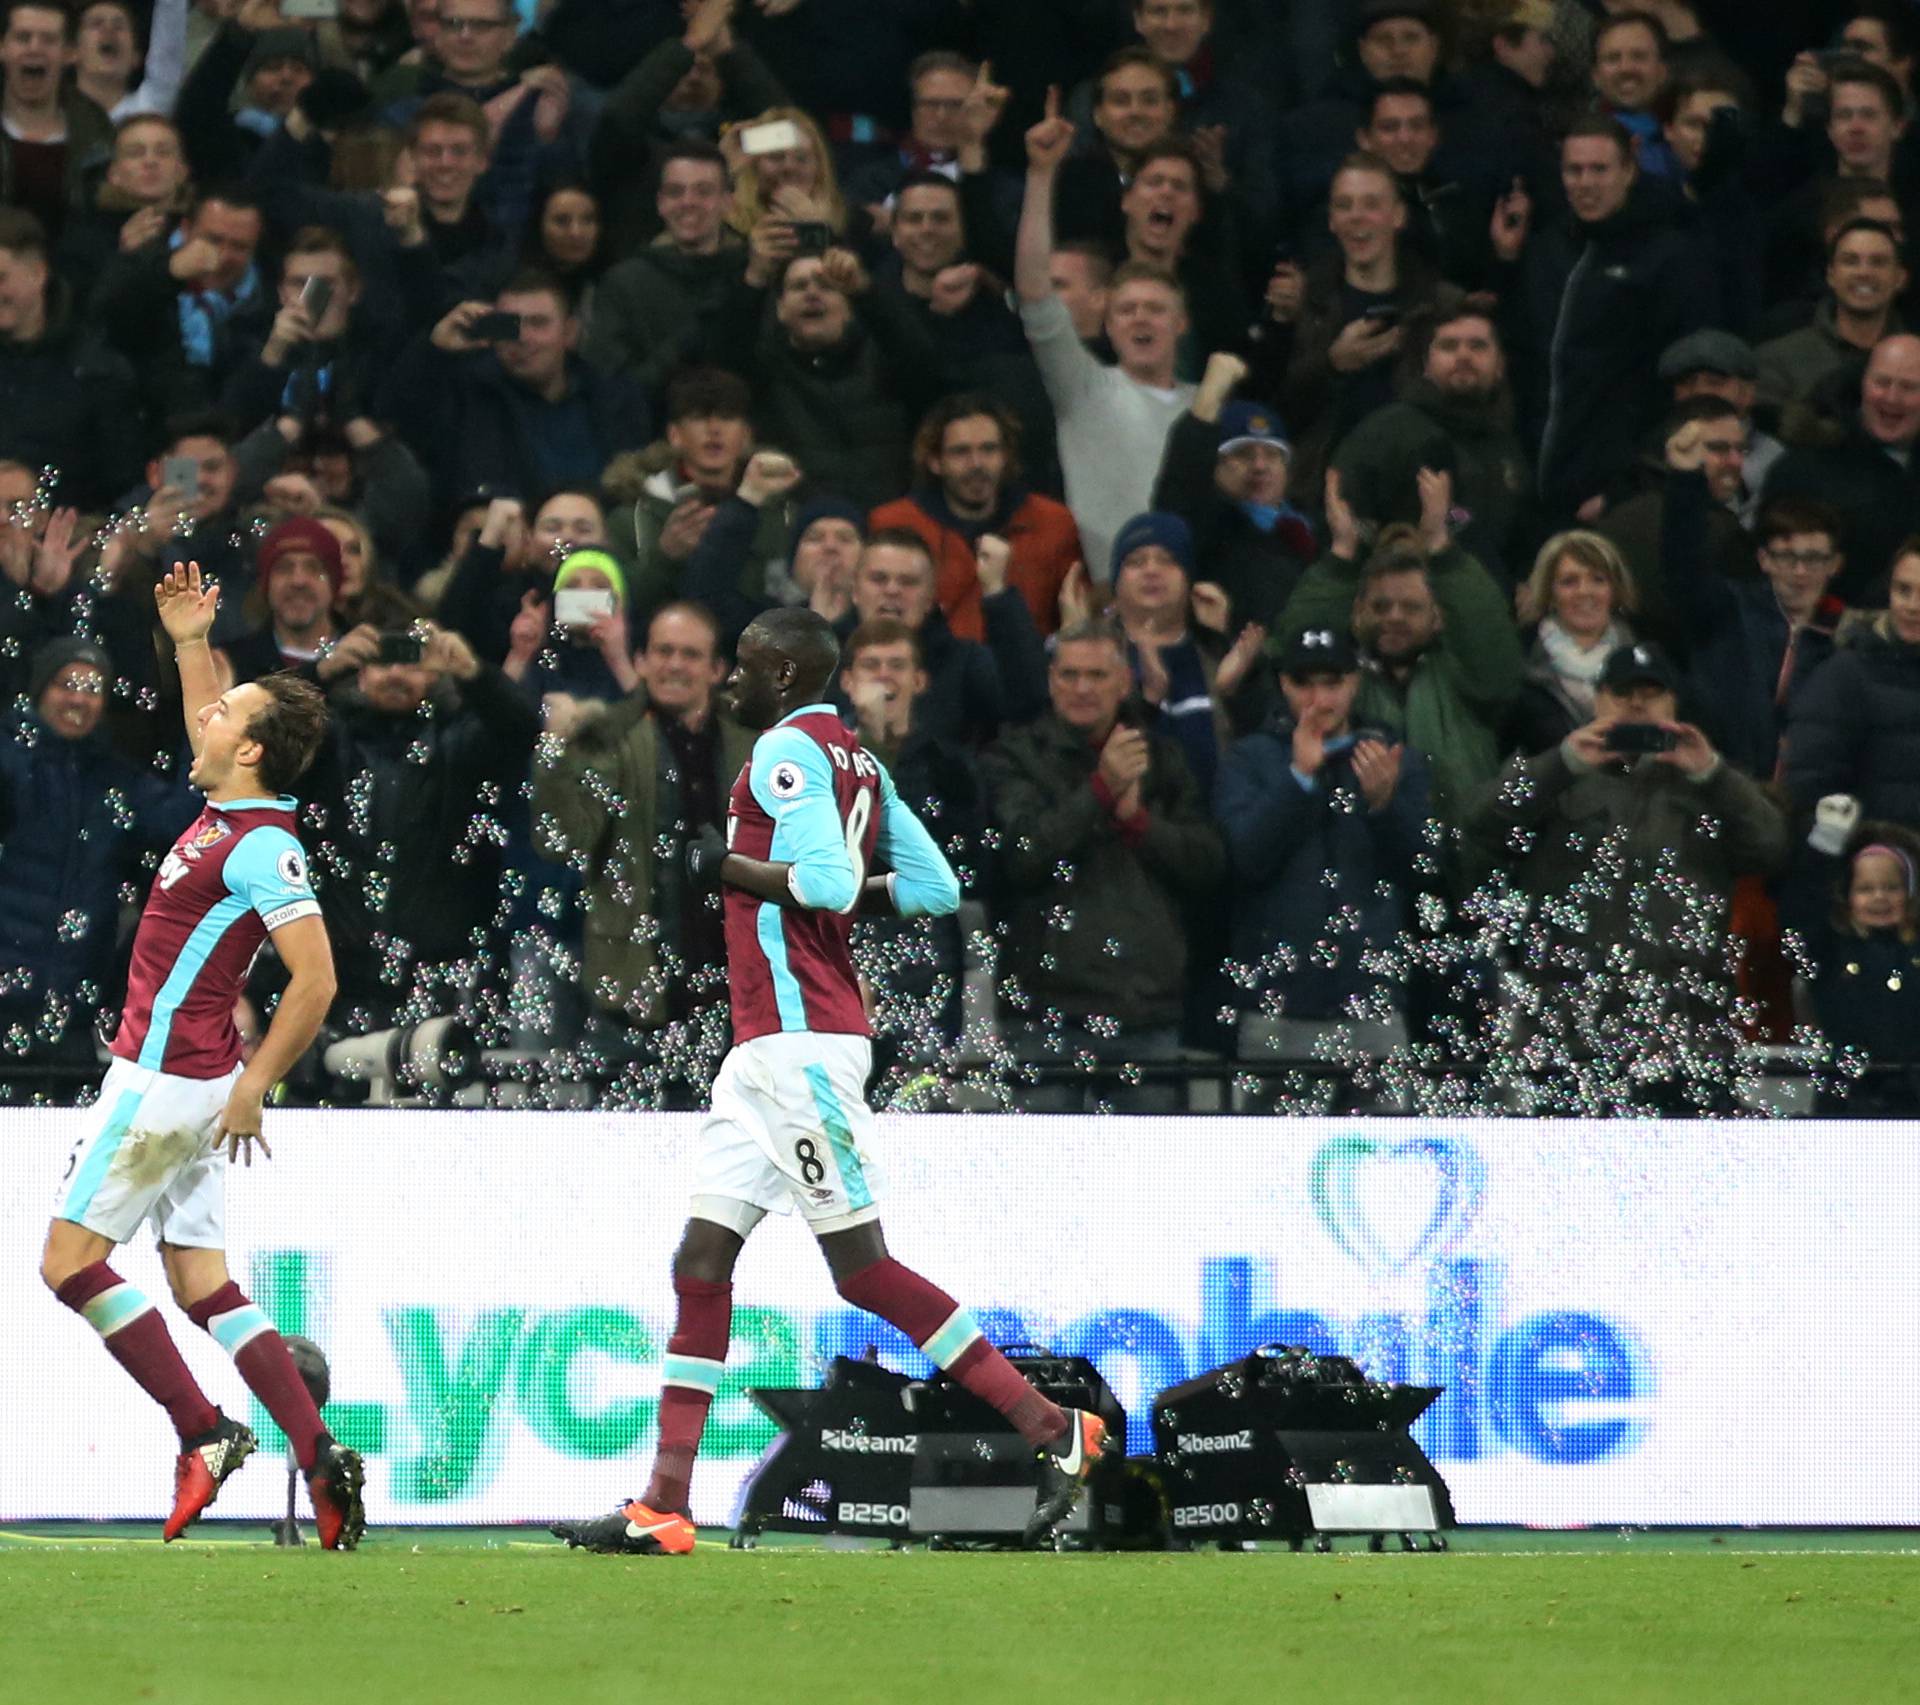 West Ham United's Mark Noble celebrates scoring their first goal